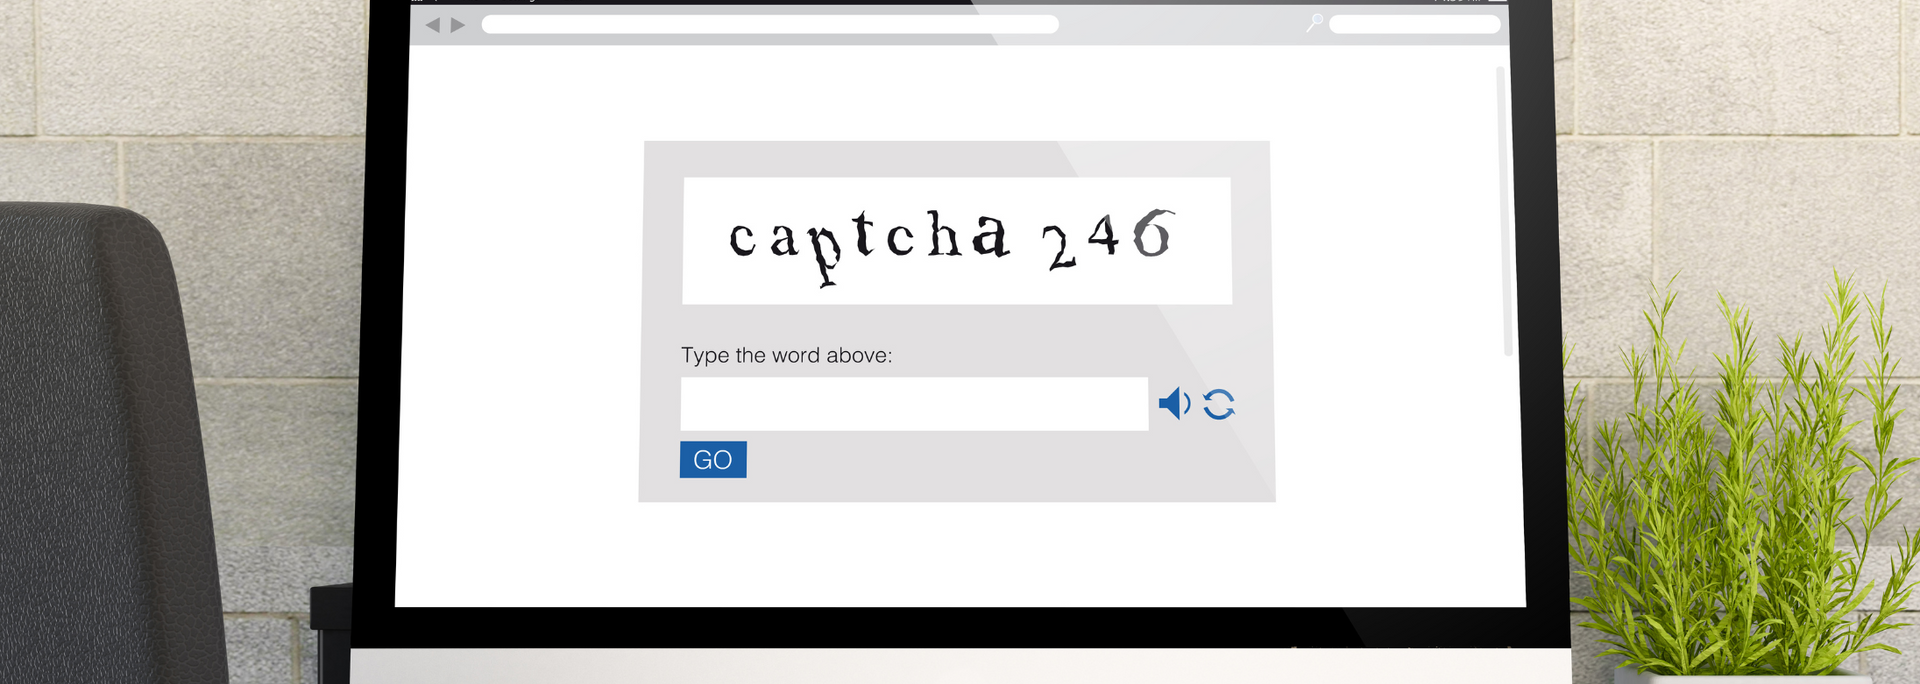 Picture representing a CAPTCHA